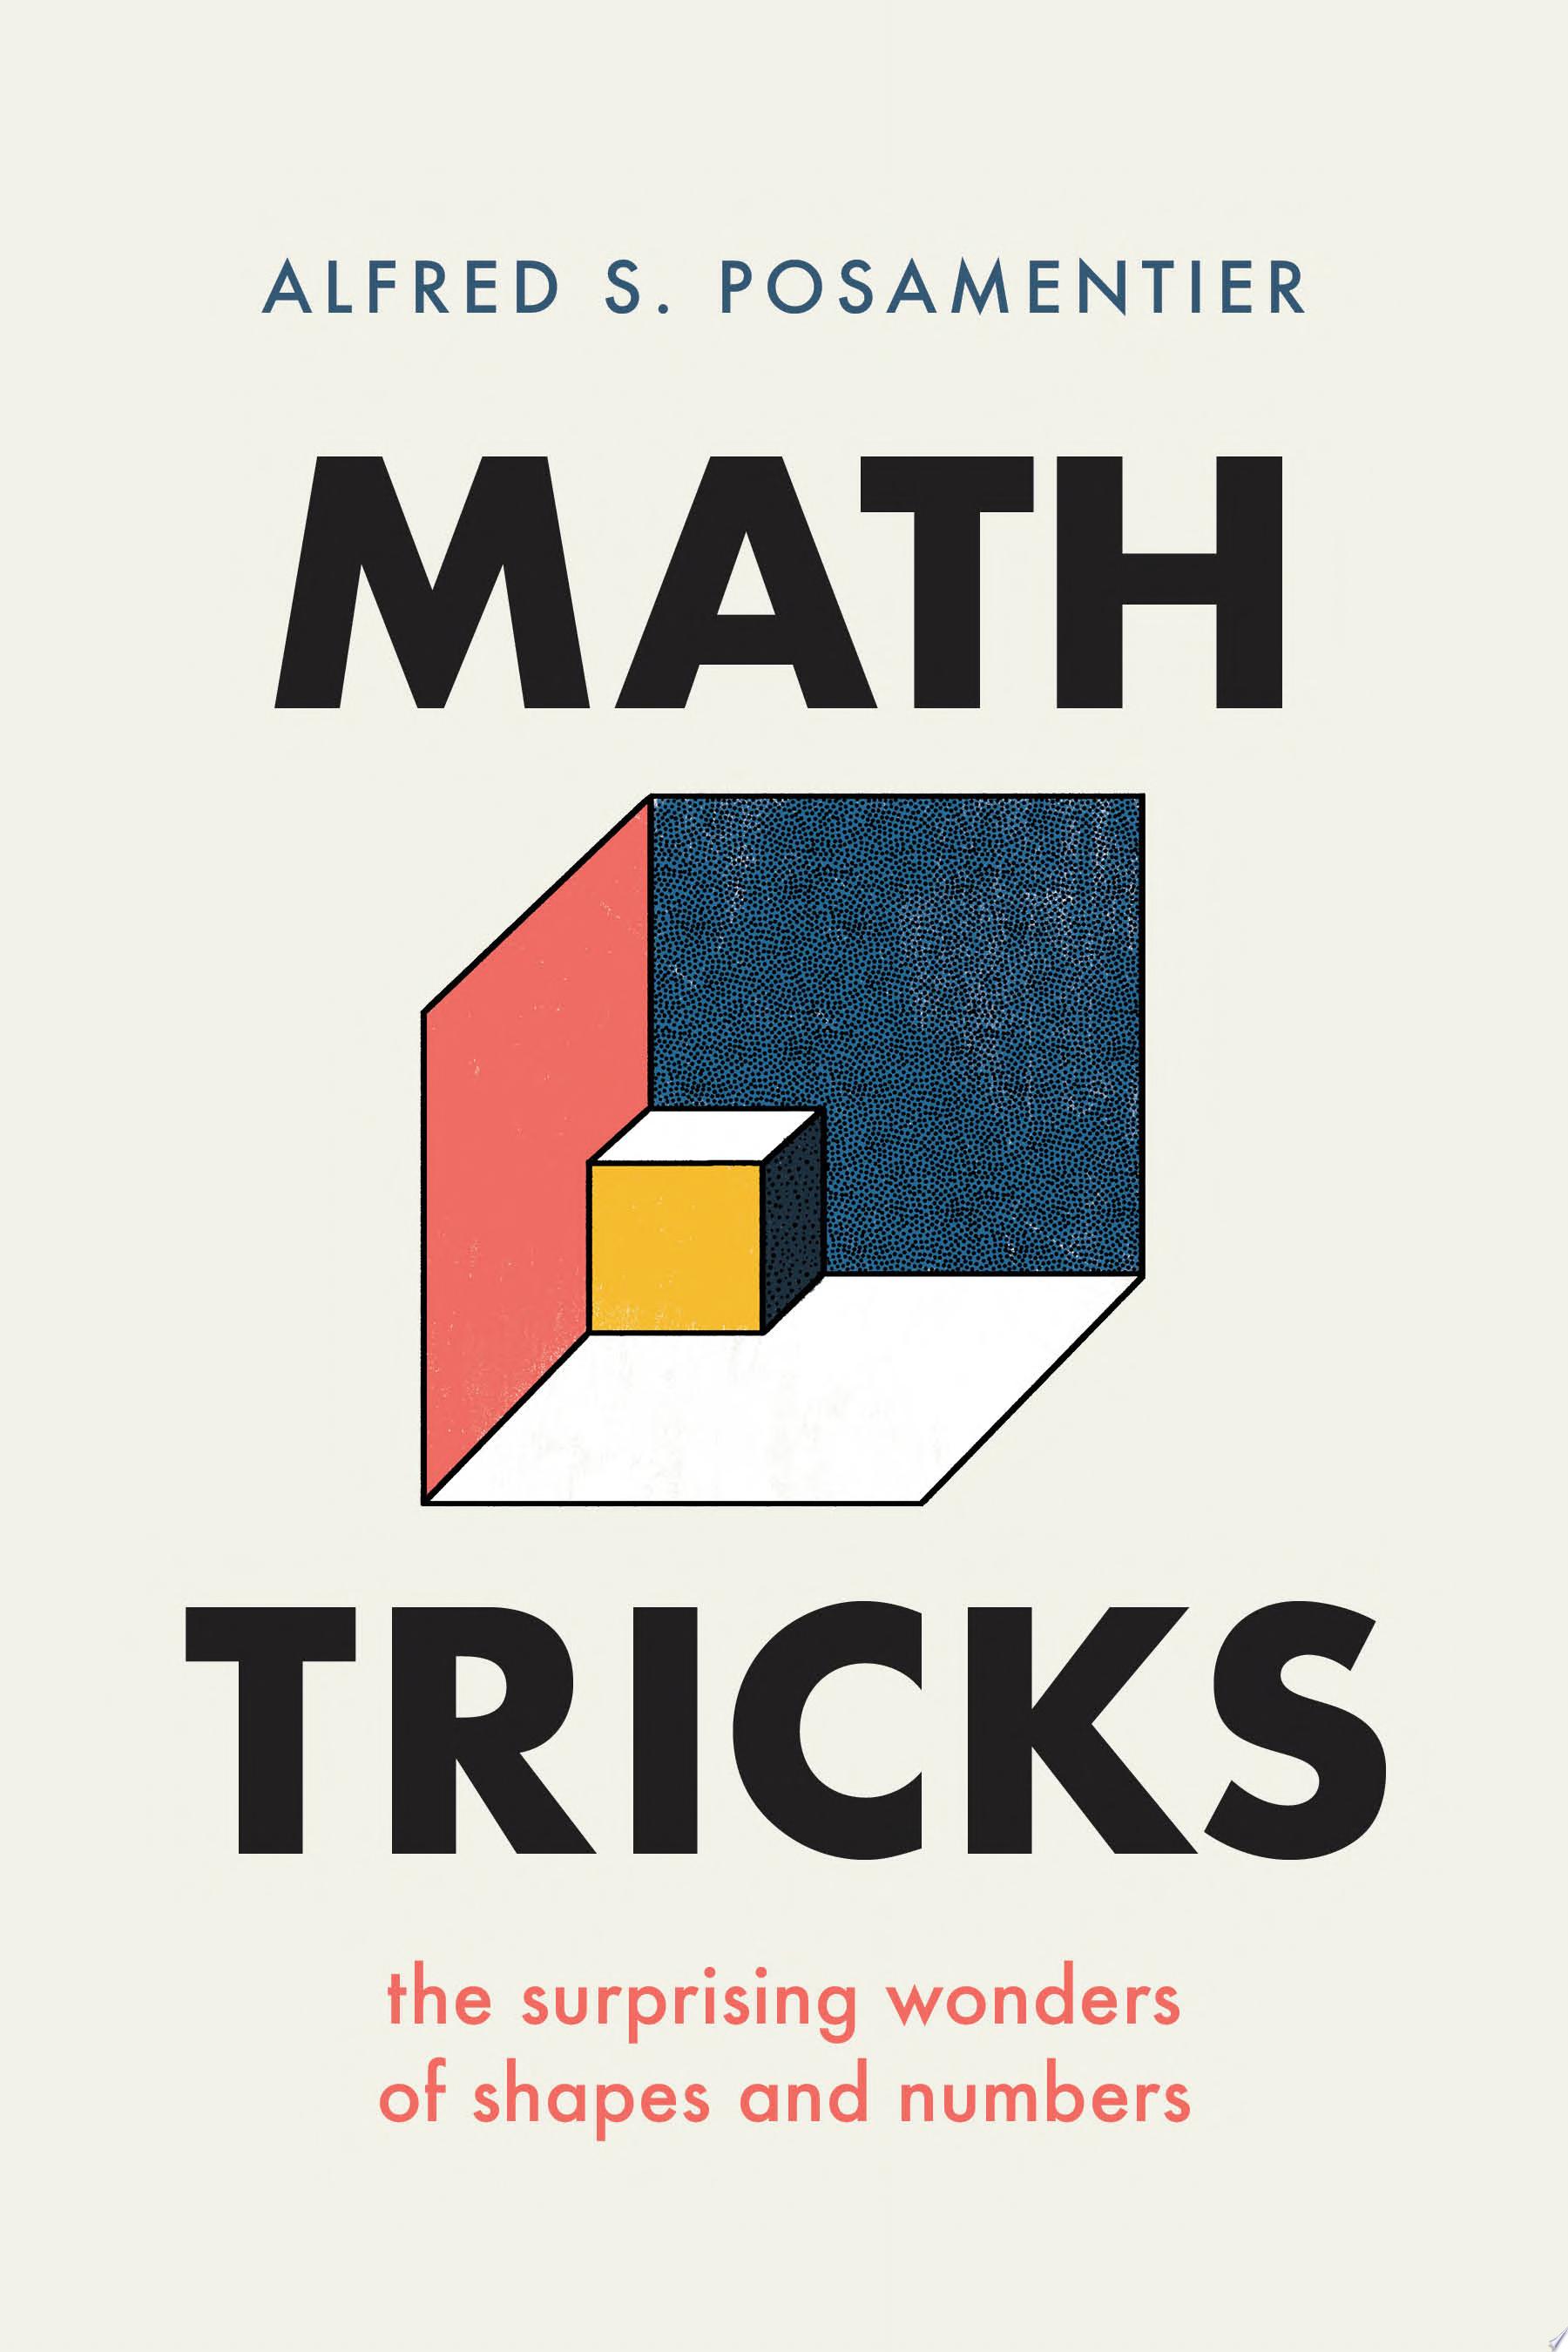 Image for "Math Tricks"